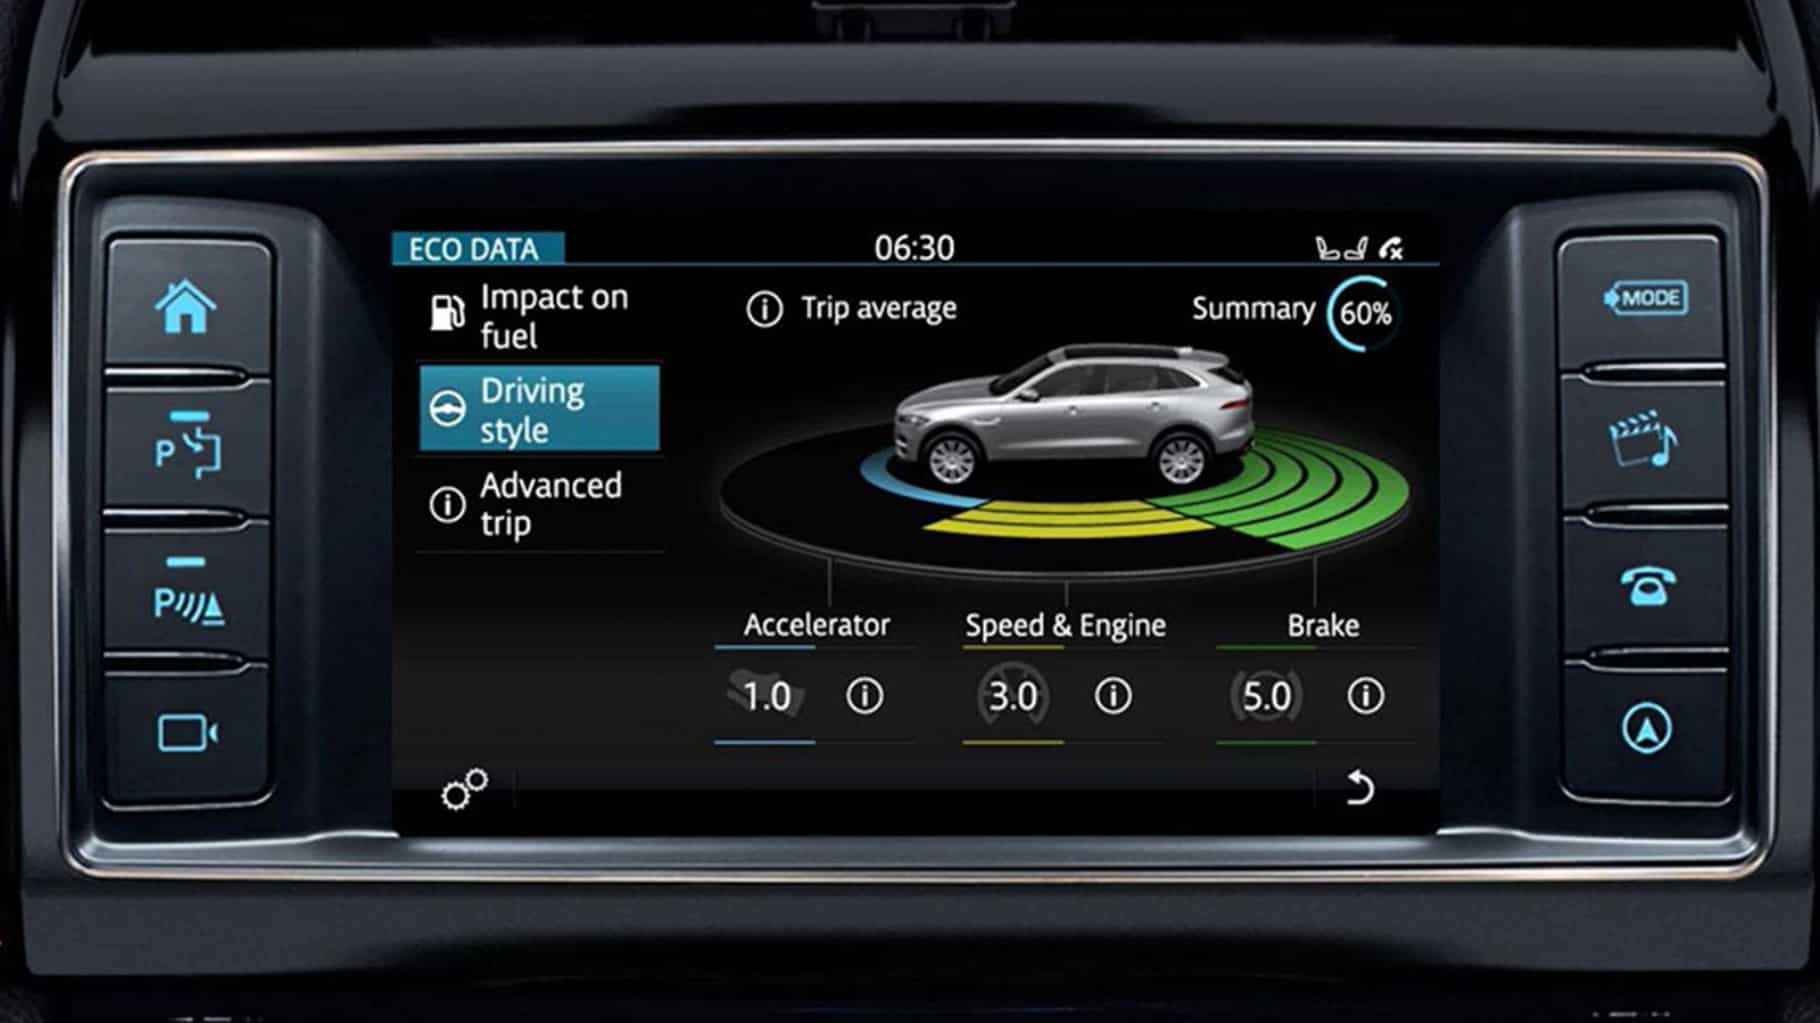 Jaguar F-PACE's InControl Touch: Eco Data information video.